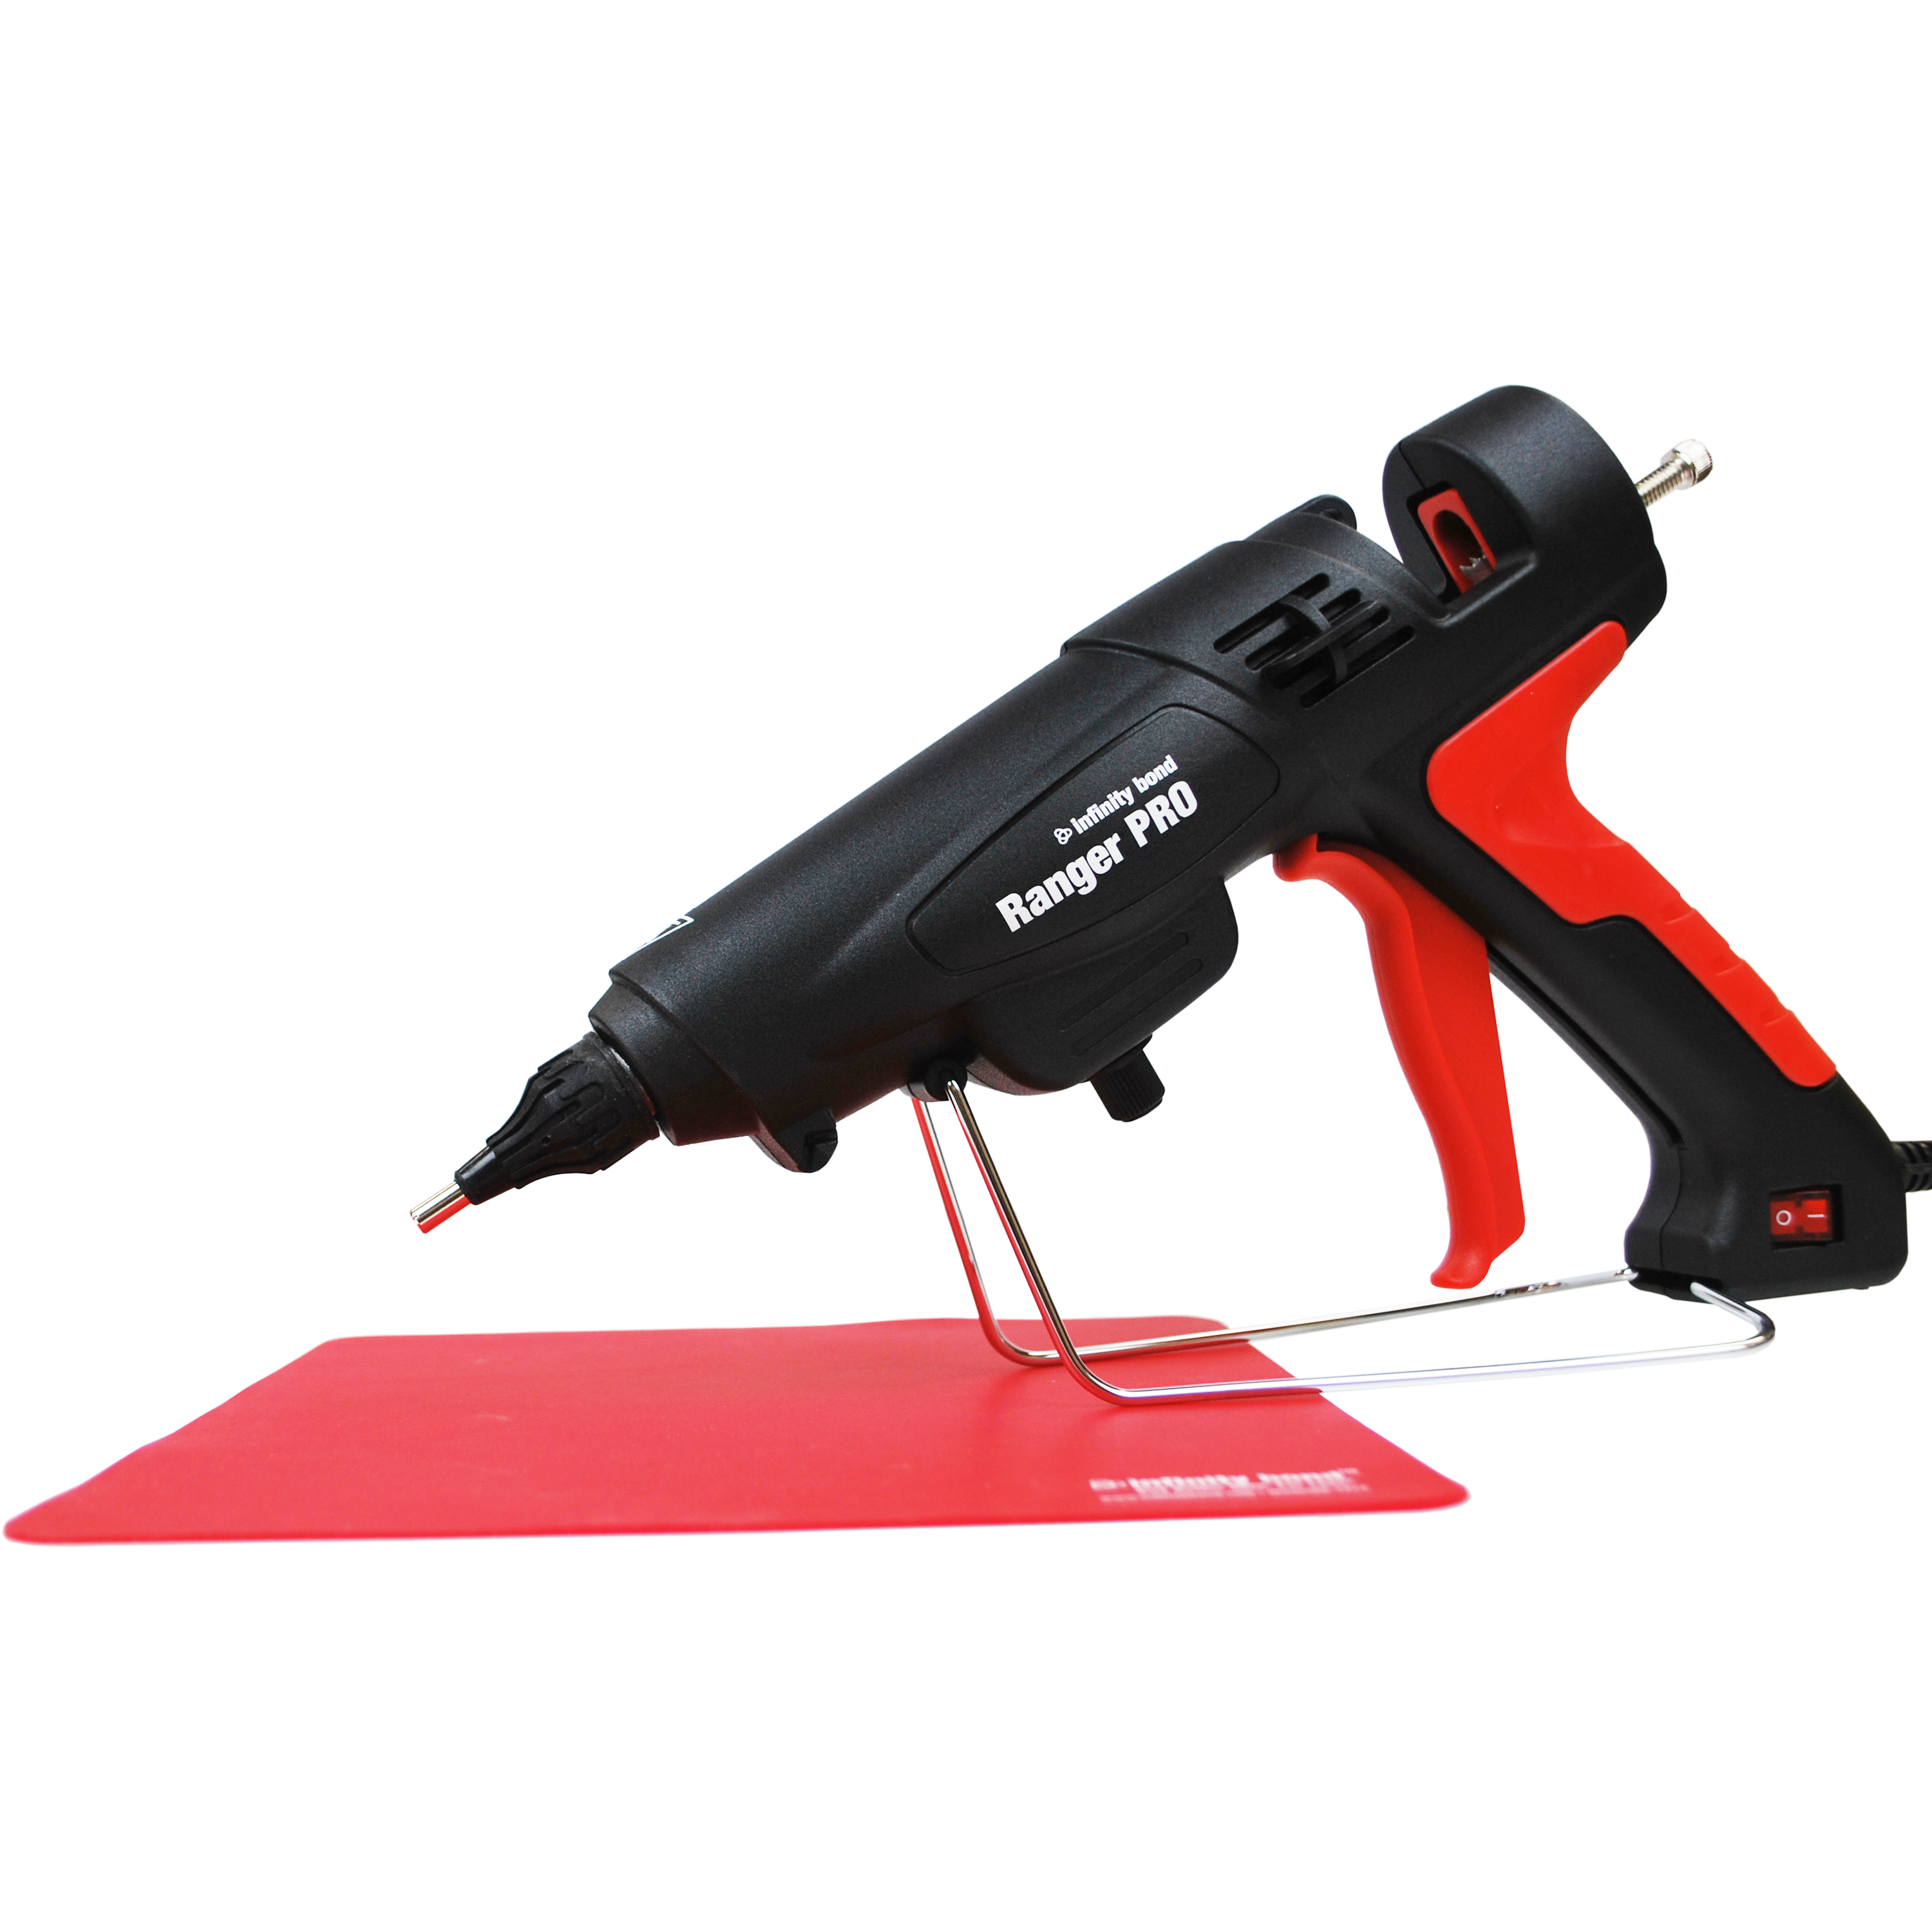 Crafty Magic Melt Low Temp Glue Gun Bonder New LTB (Low Temp Bonder)